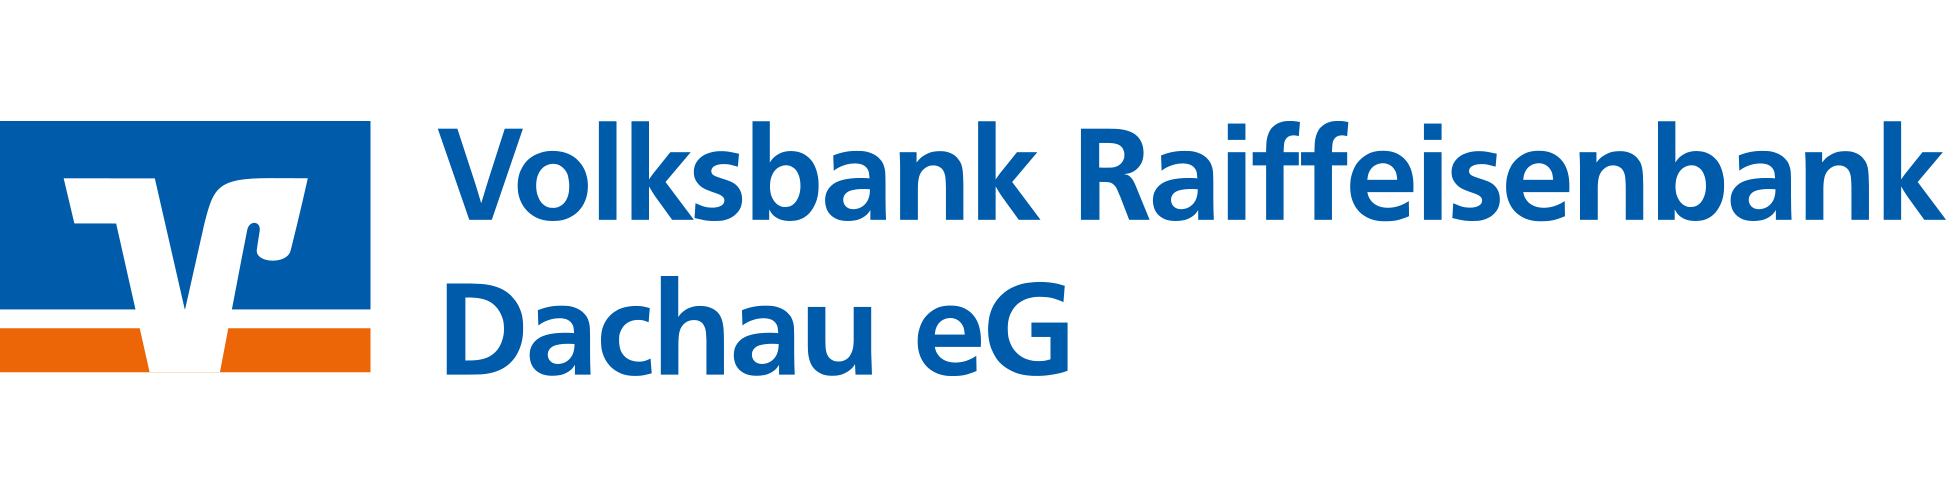 Volksbank Raiffeisenbank Dachau